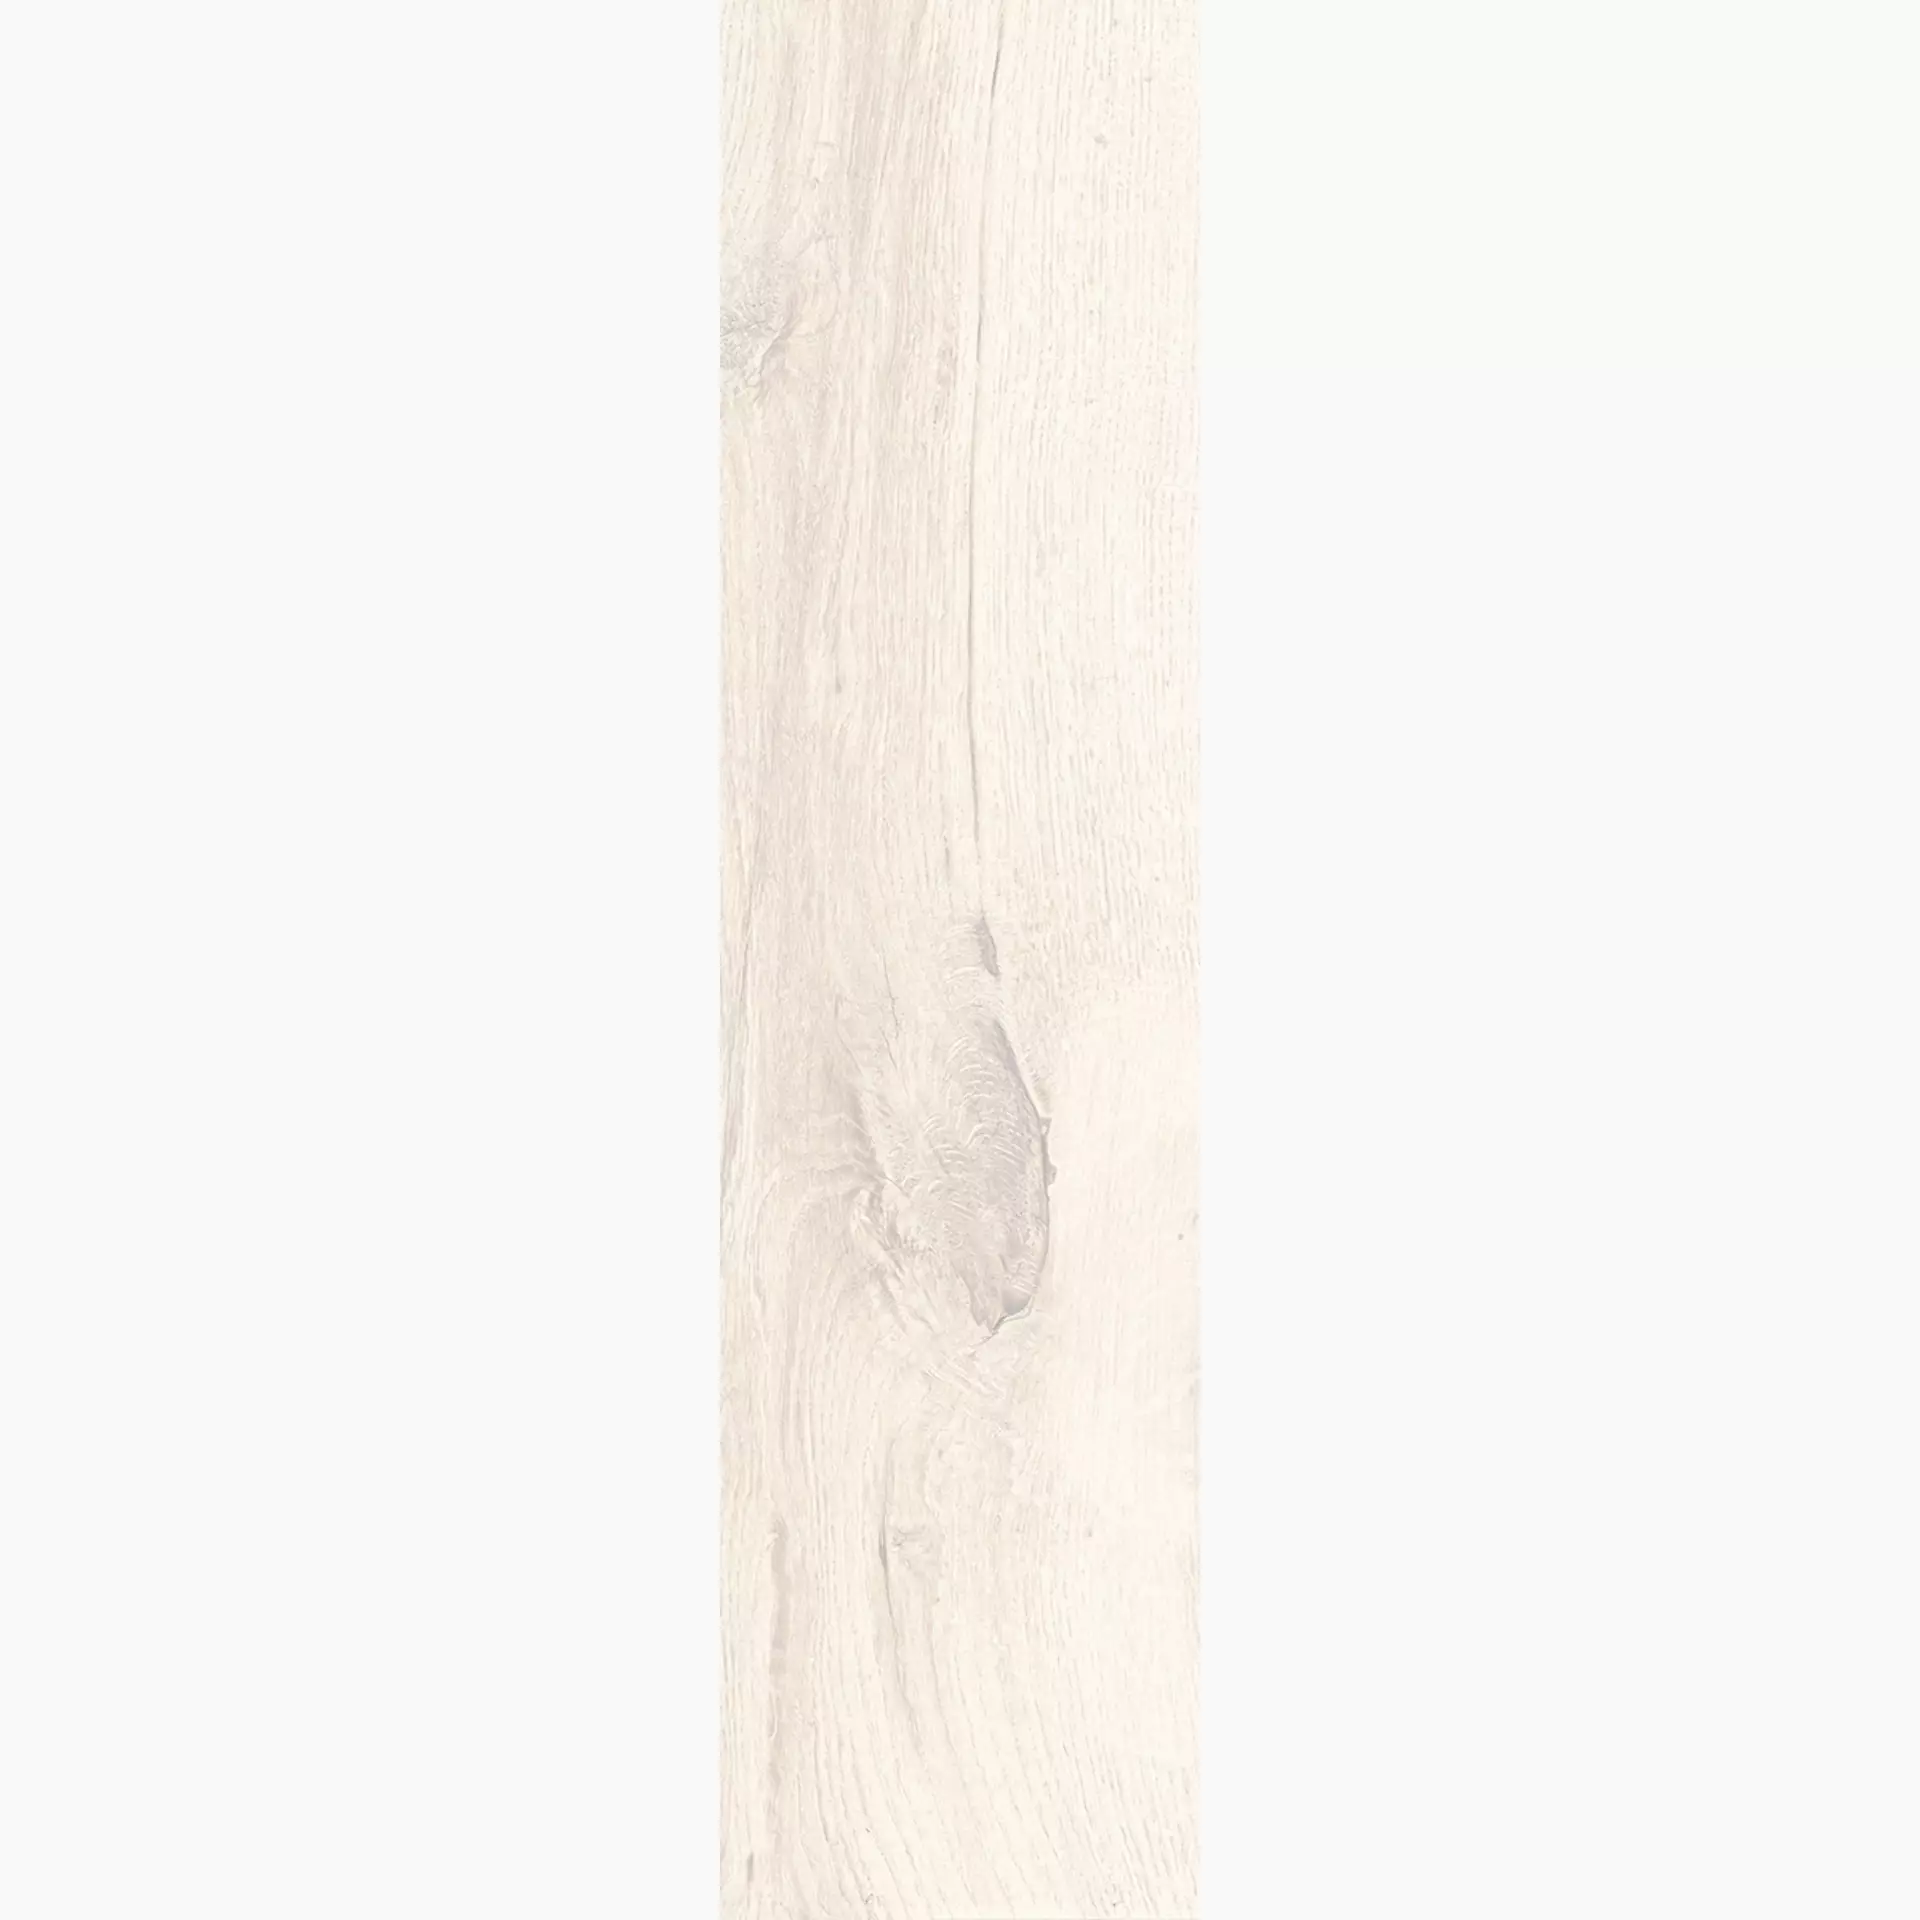 Rondine Living Bianco Naturale J86152 15x61cm 9mm